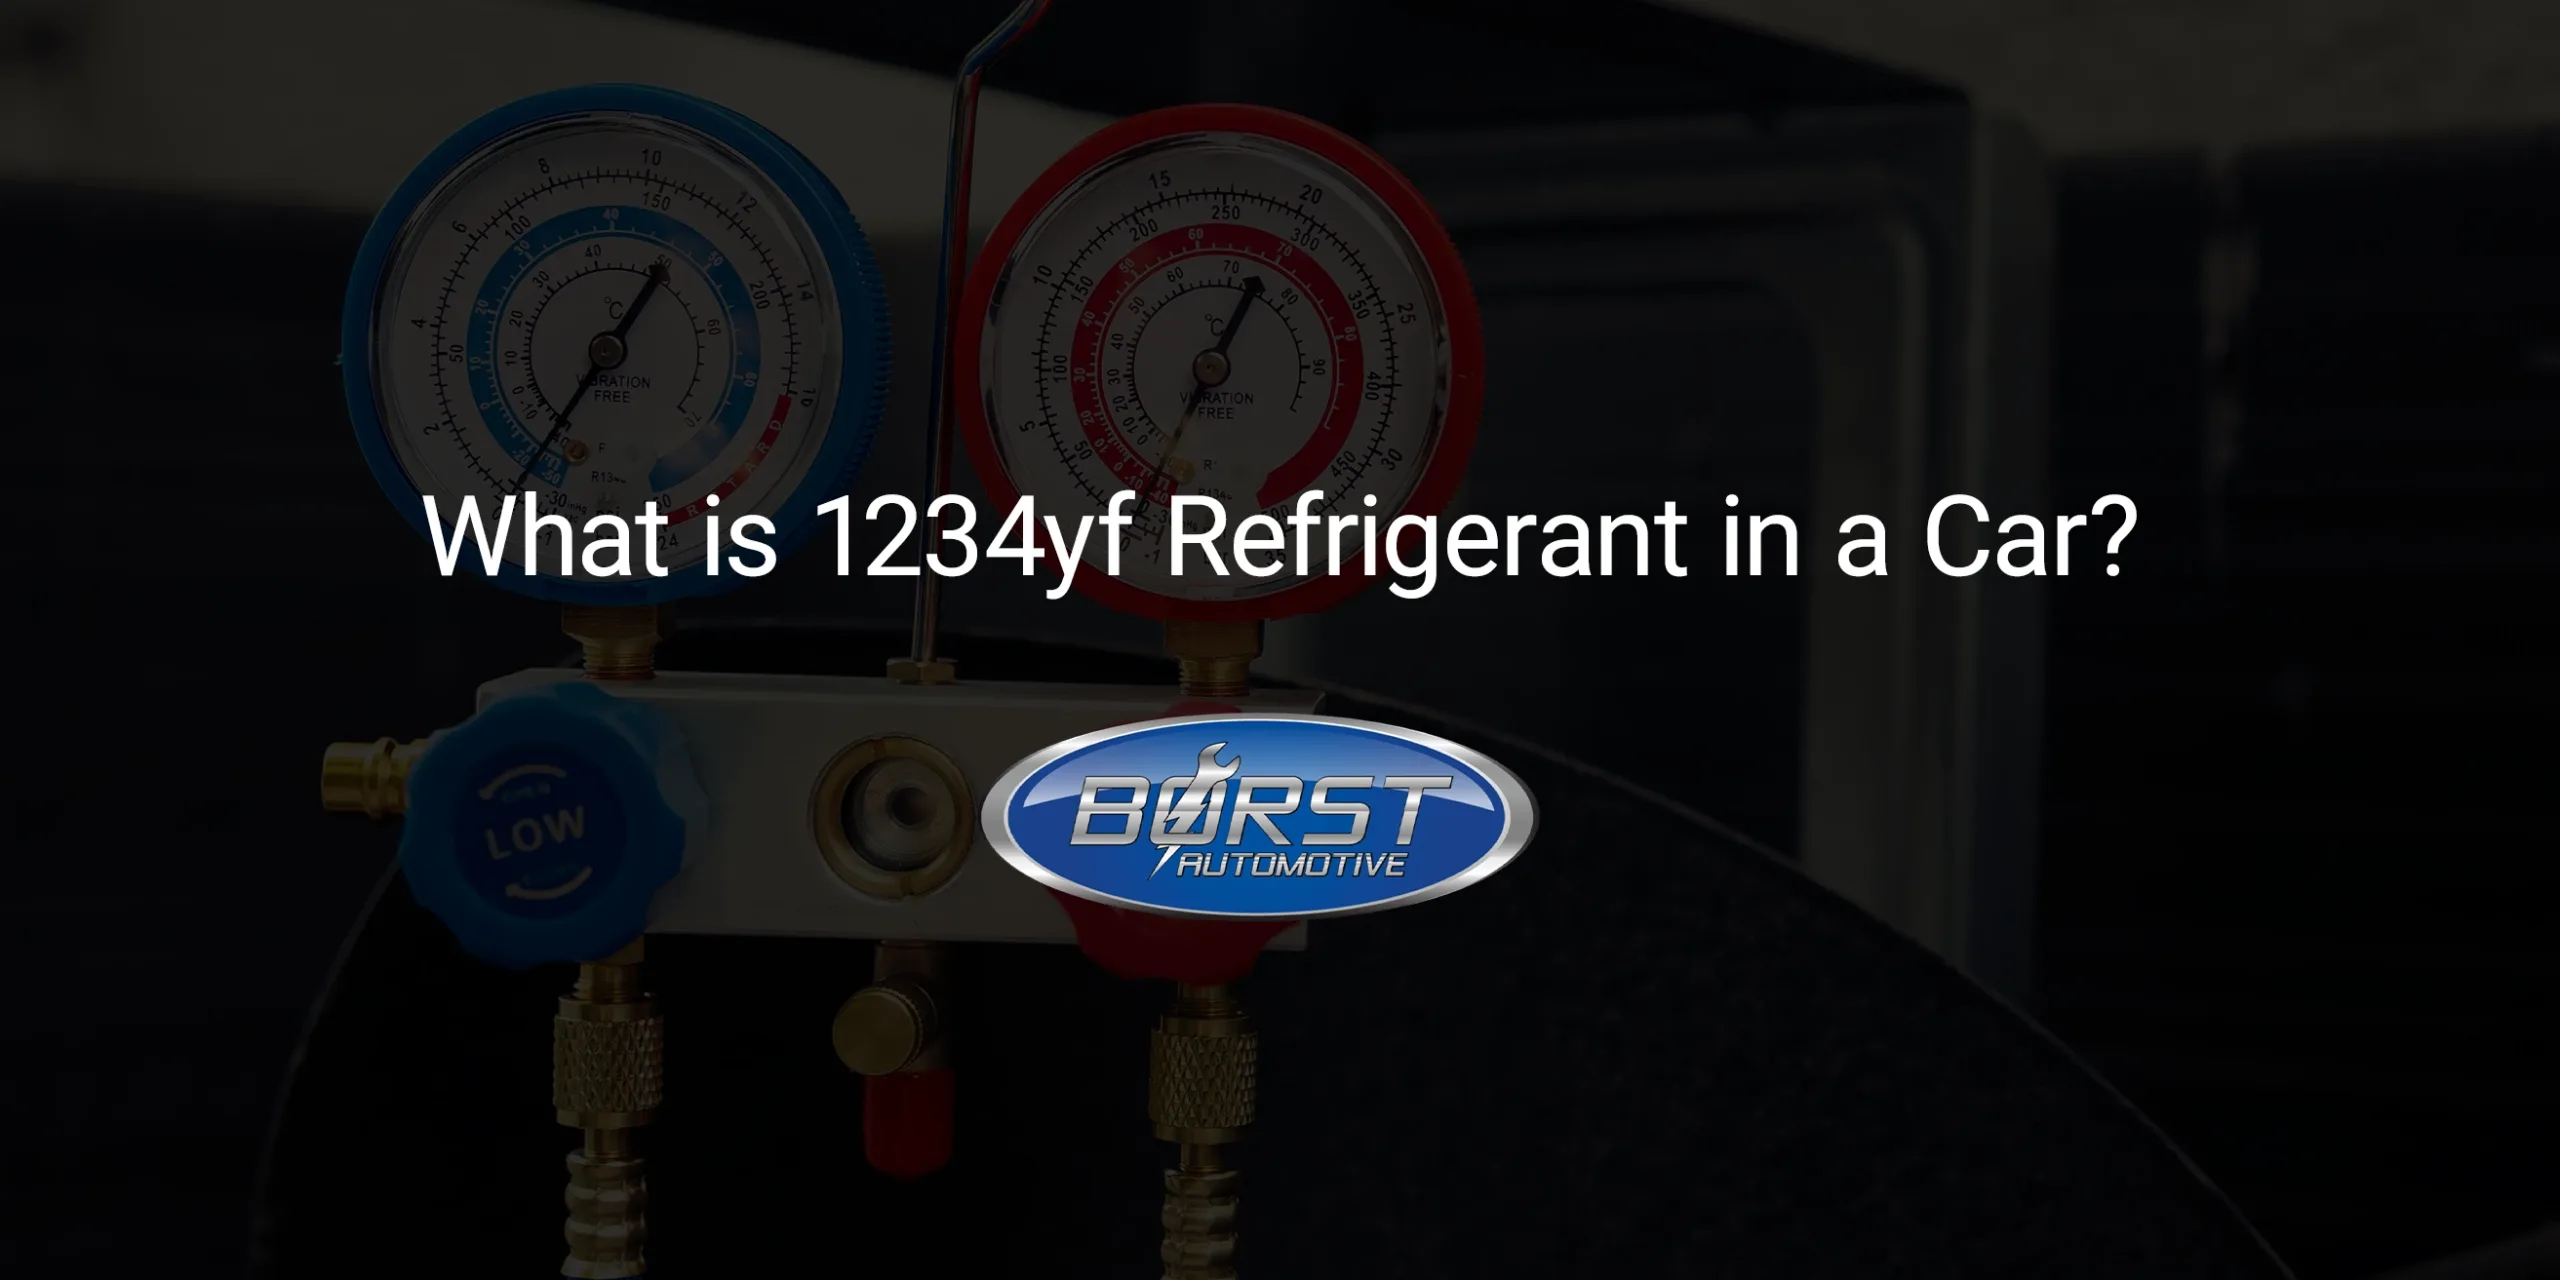 What is 1234yf Refrigerant in a Car?